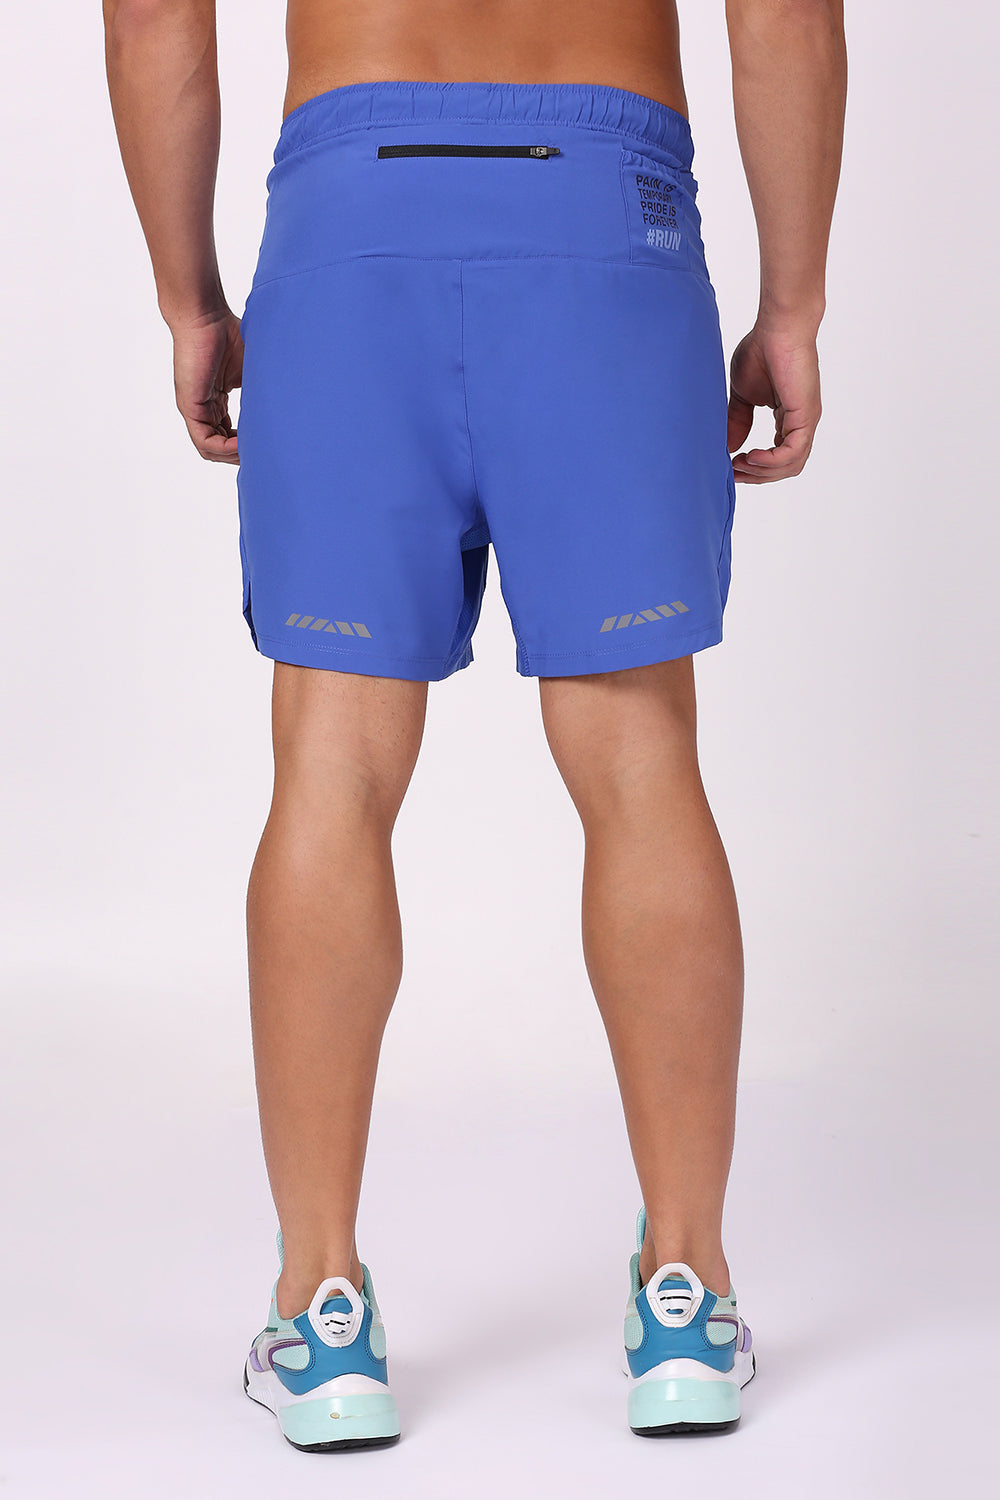 Men's 5" EnduroFlex Running Shorts